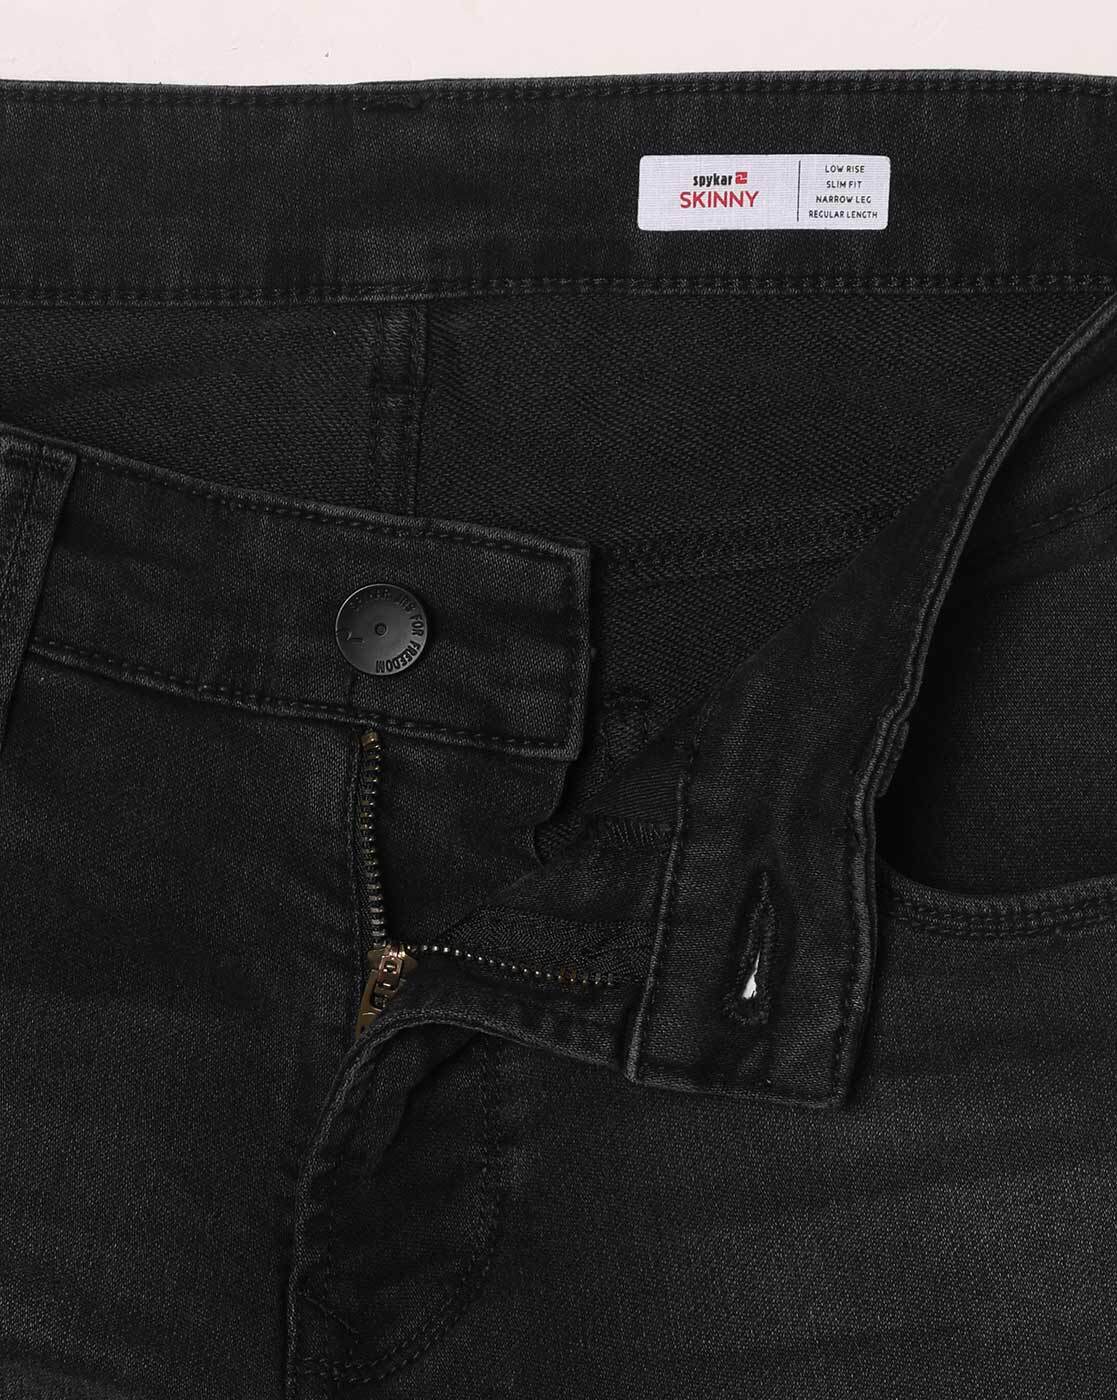 Details more than 206 spykar black jeans latest